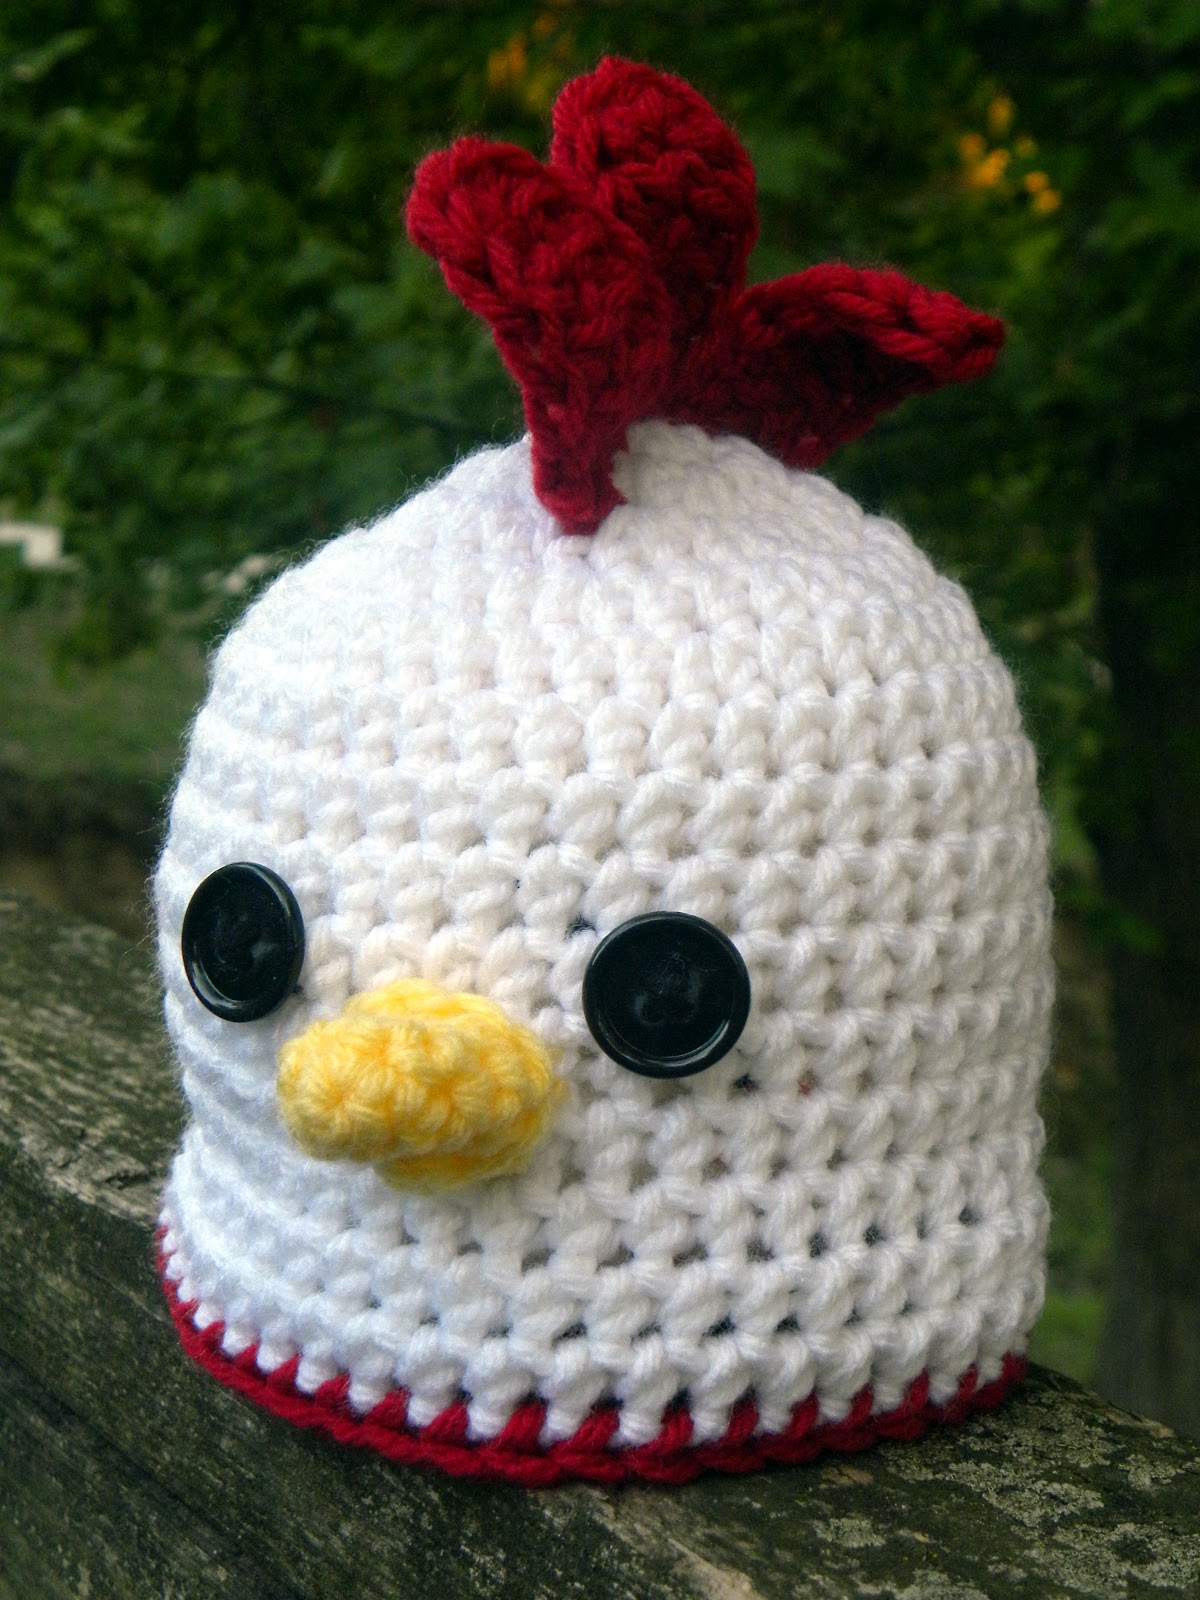 AshTree Crochet: Crochet Hen Hat